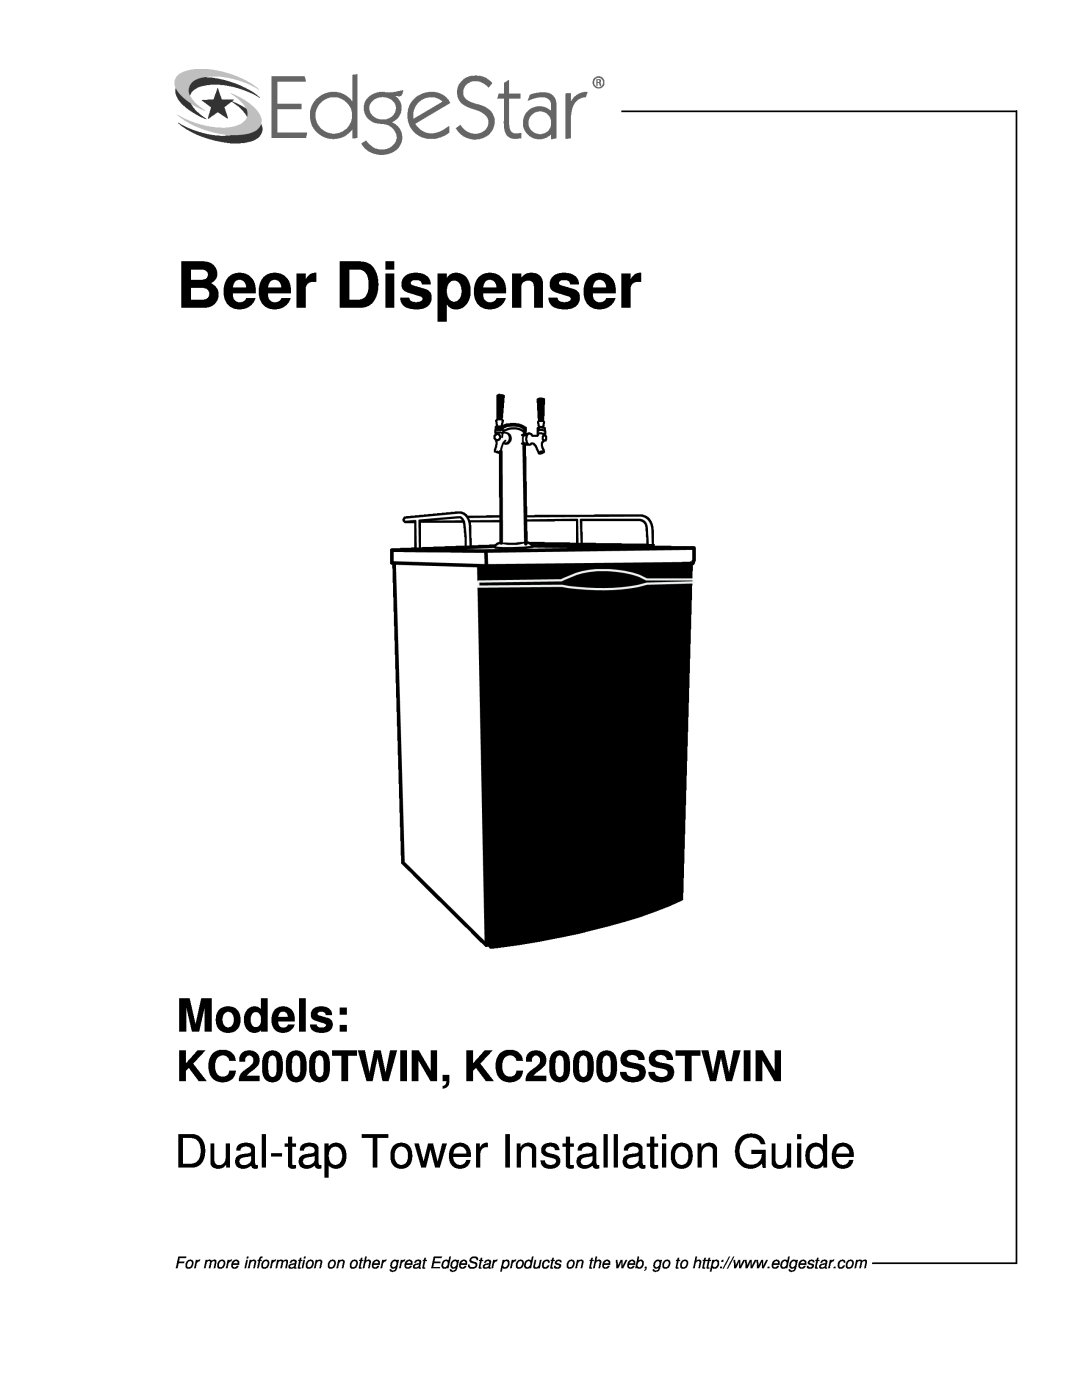 EdgeStar manual Beer Dispenser, Models, Dual-tapTower Installation Guide, KC2000TWIN, KC2000SSTWIN 